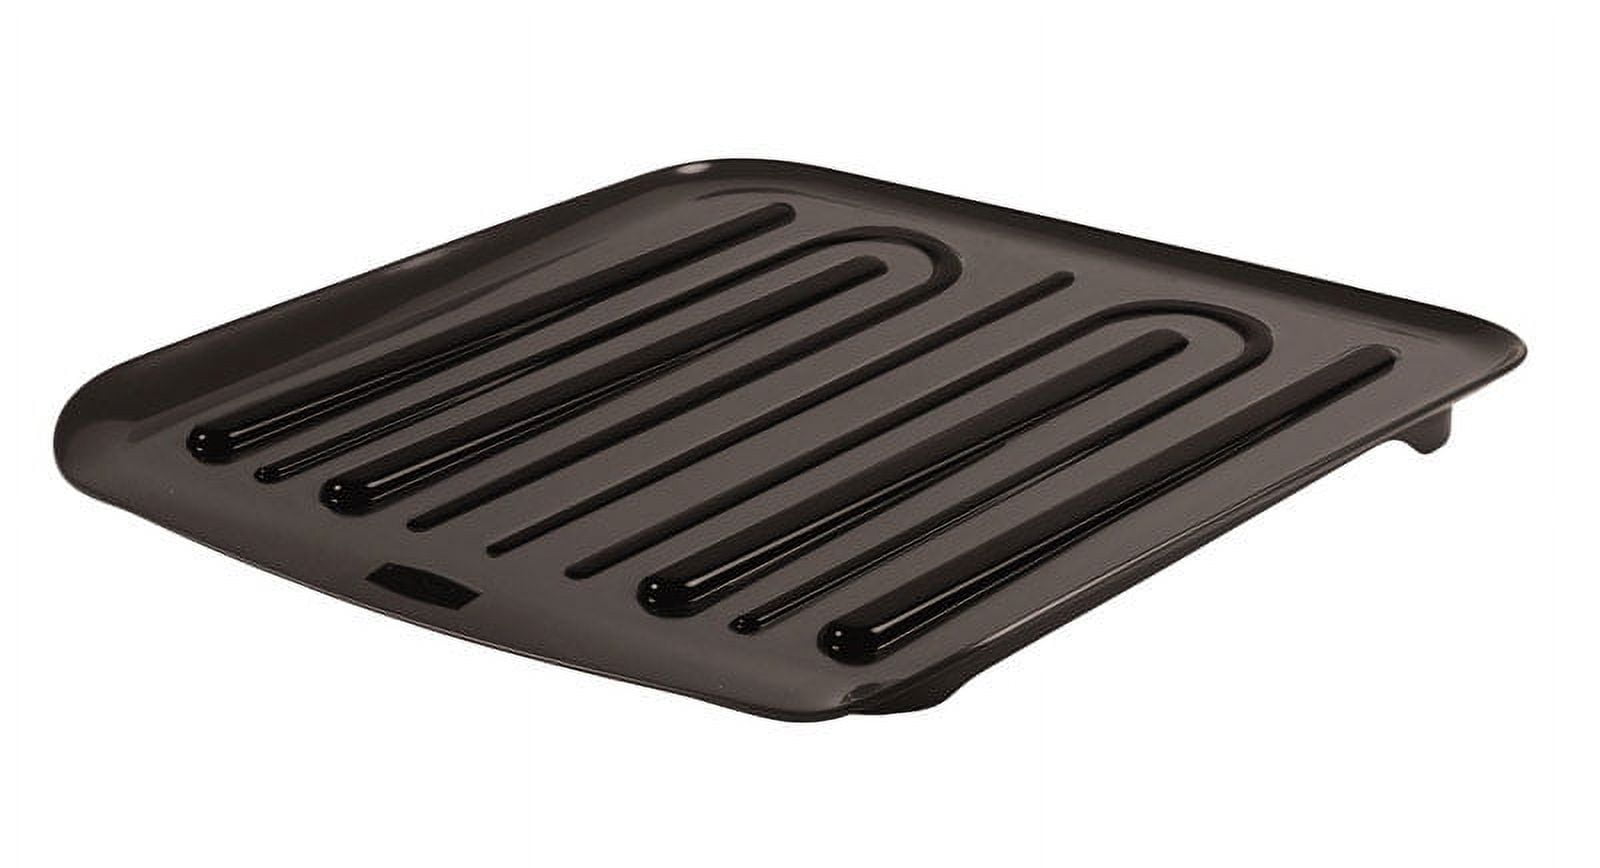 Neat-O Universal Polypropylene Dish Drain Board for kitchen (Black)